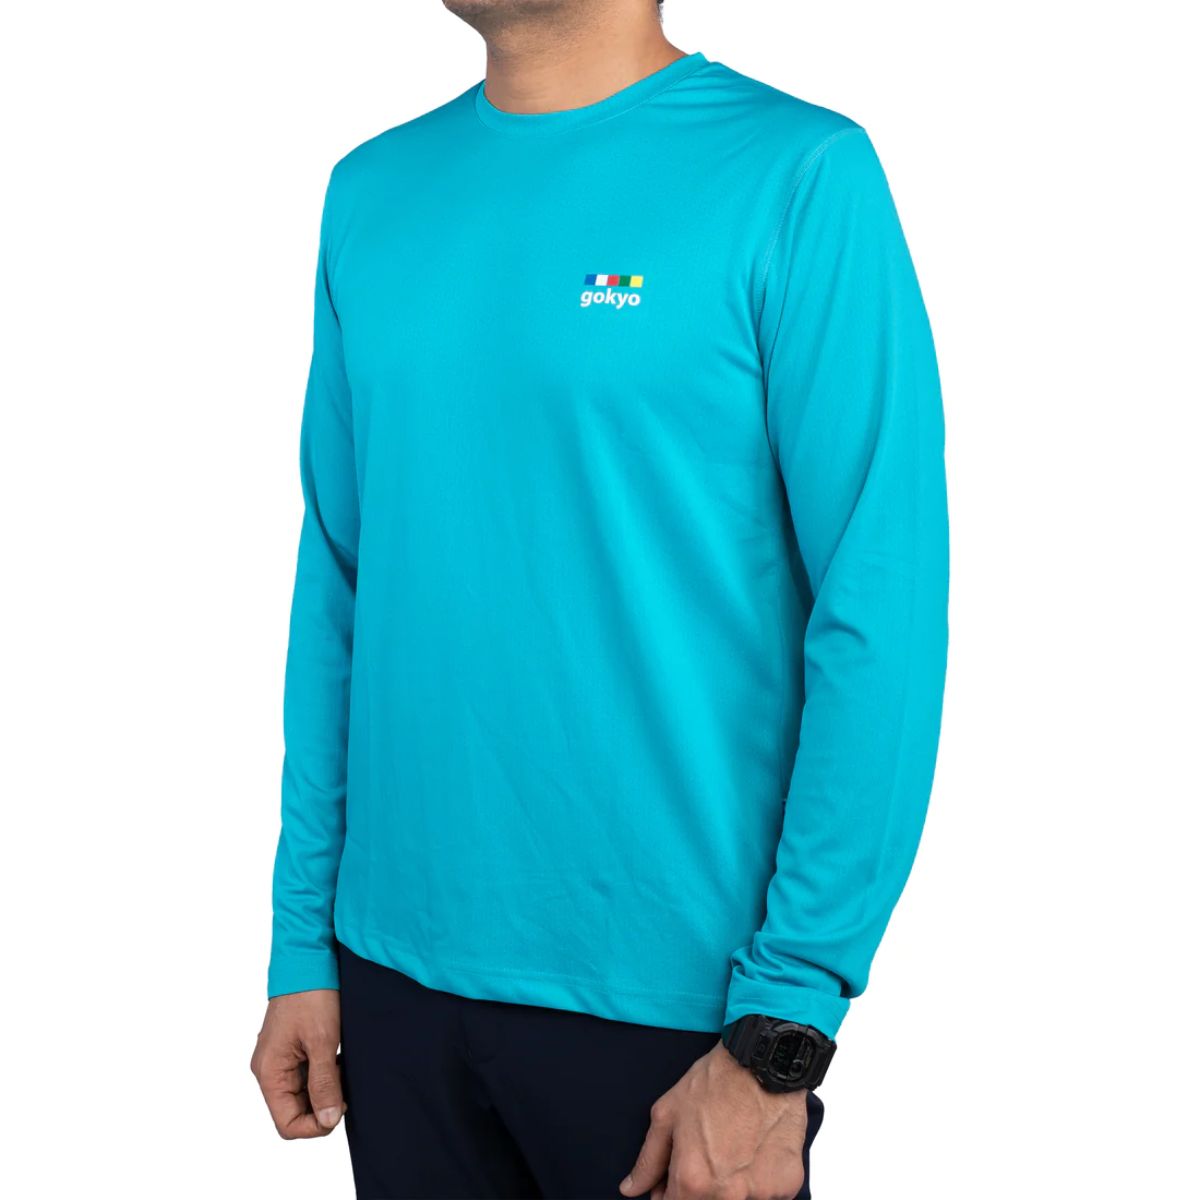 Trekking T-Shirt - Explorer Series - Turquoise 2